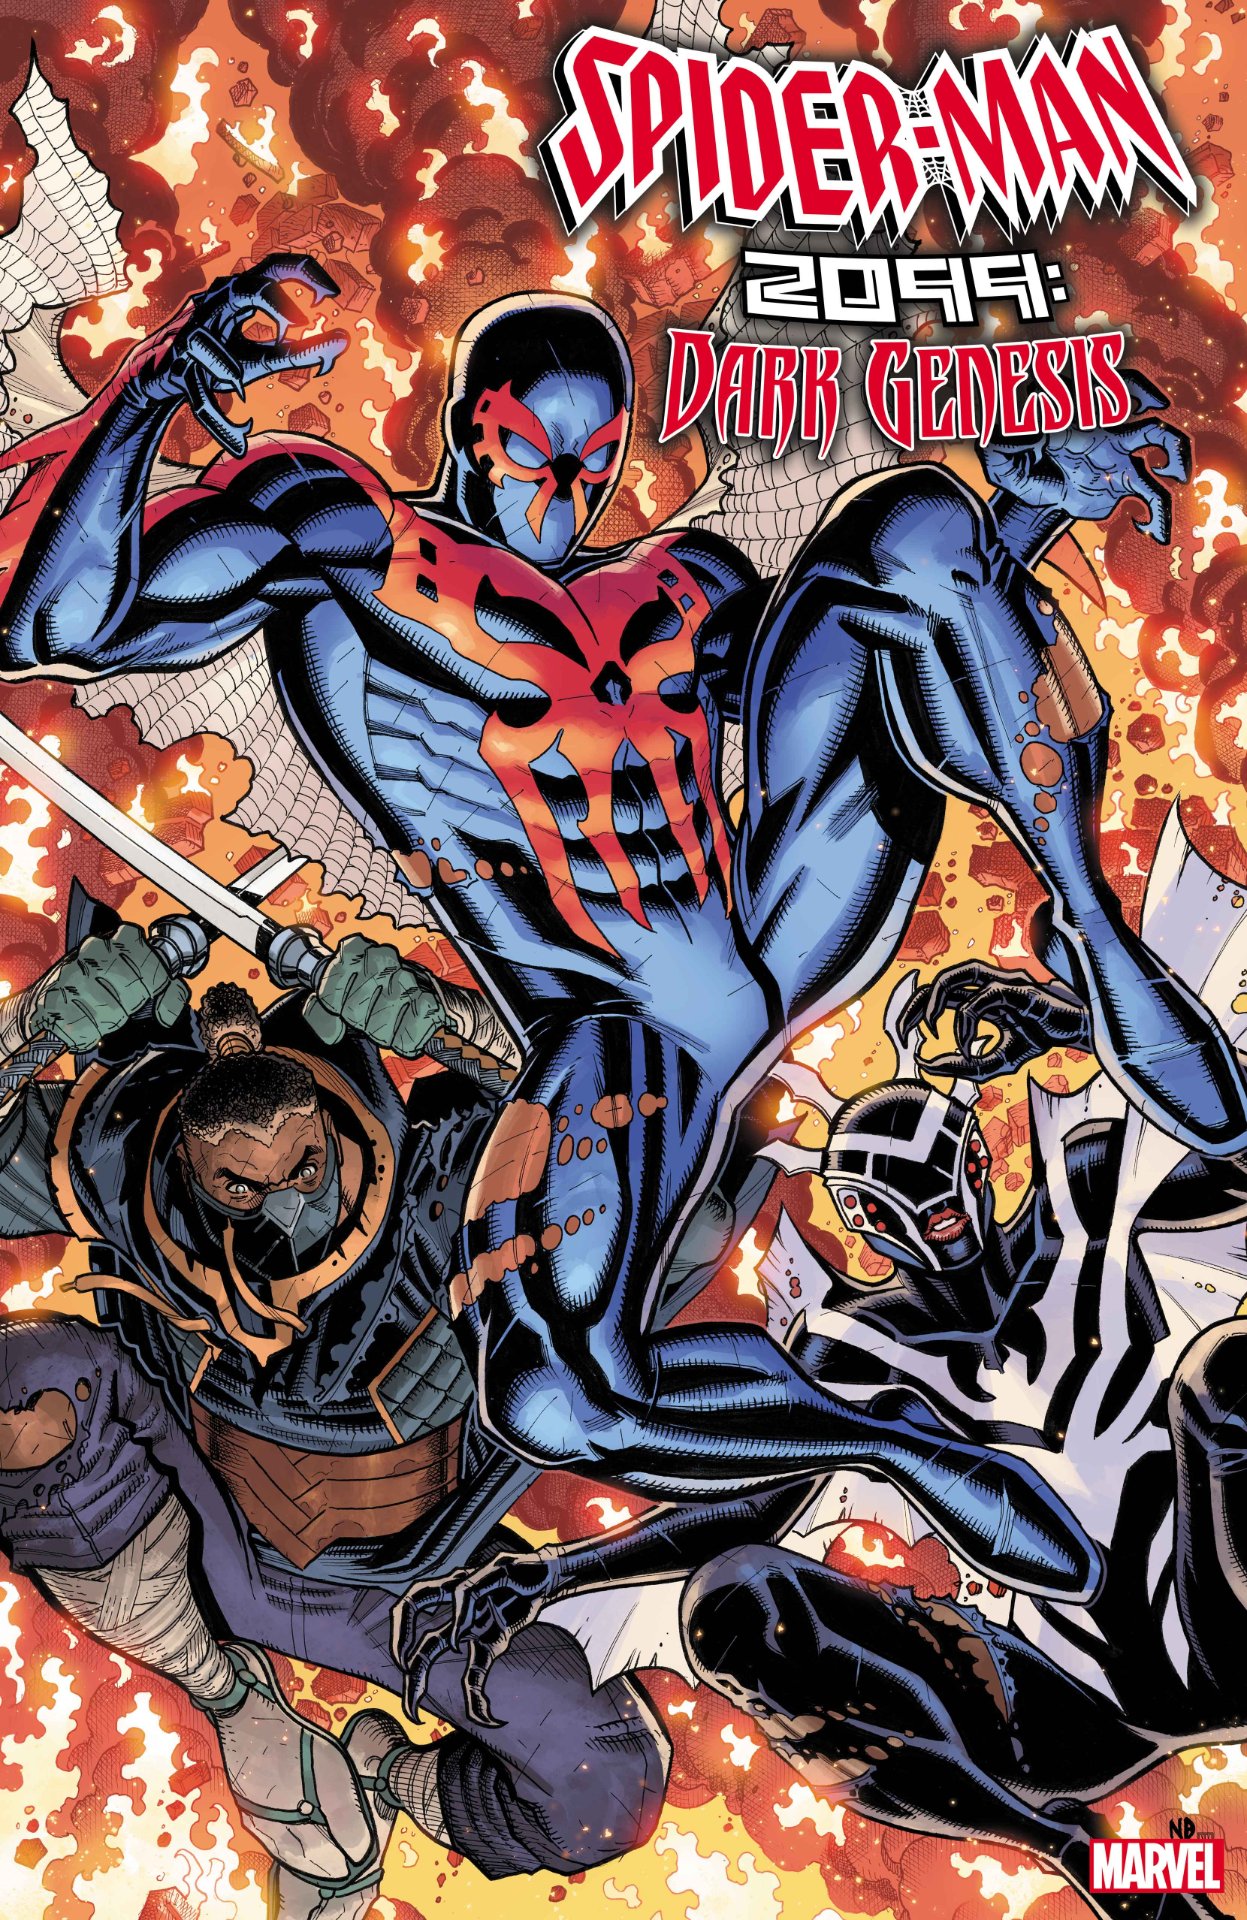 Cover of Spider-Man 2099: Dark Genesis #2